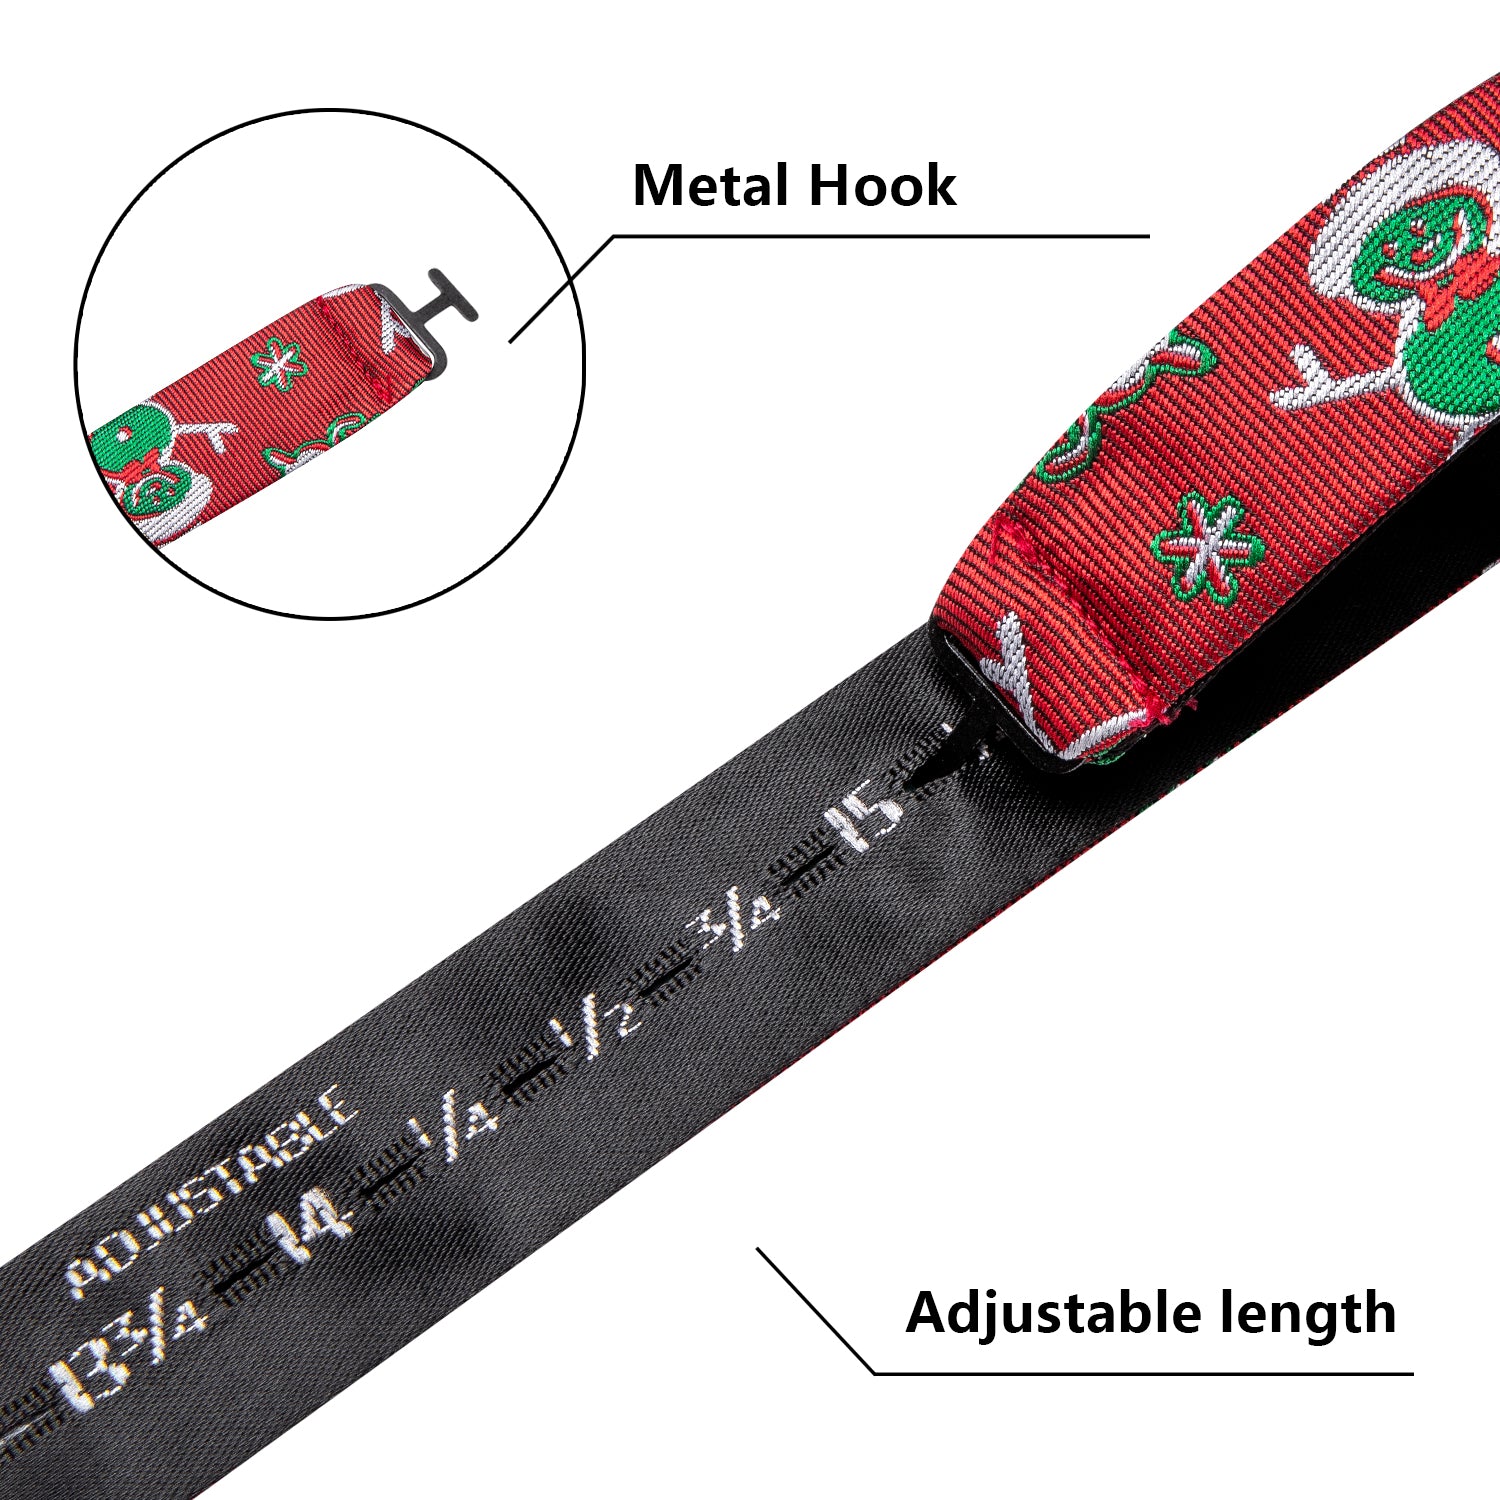 Red Green Christmas Snowmen Self-tied Bow Tie Hanky Cufflinks Set